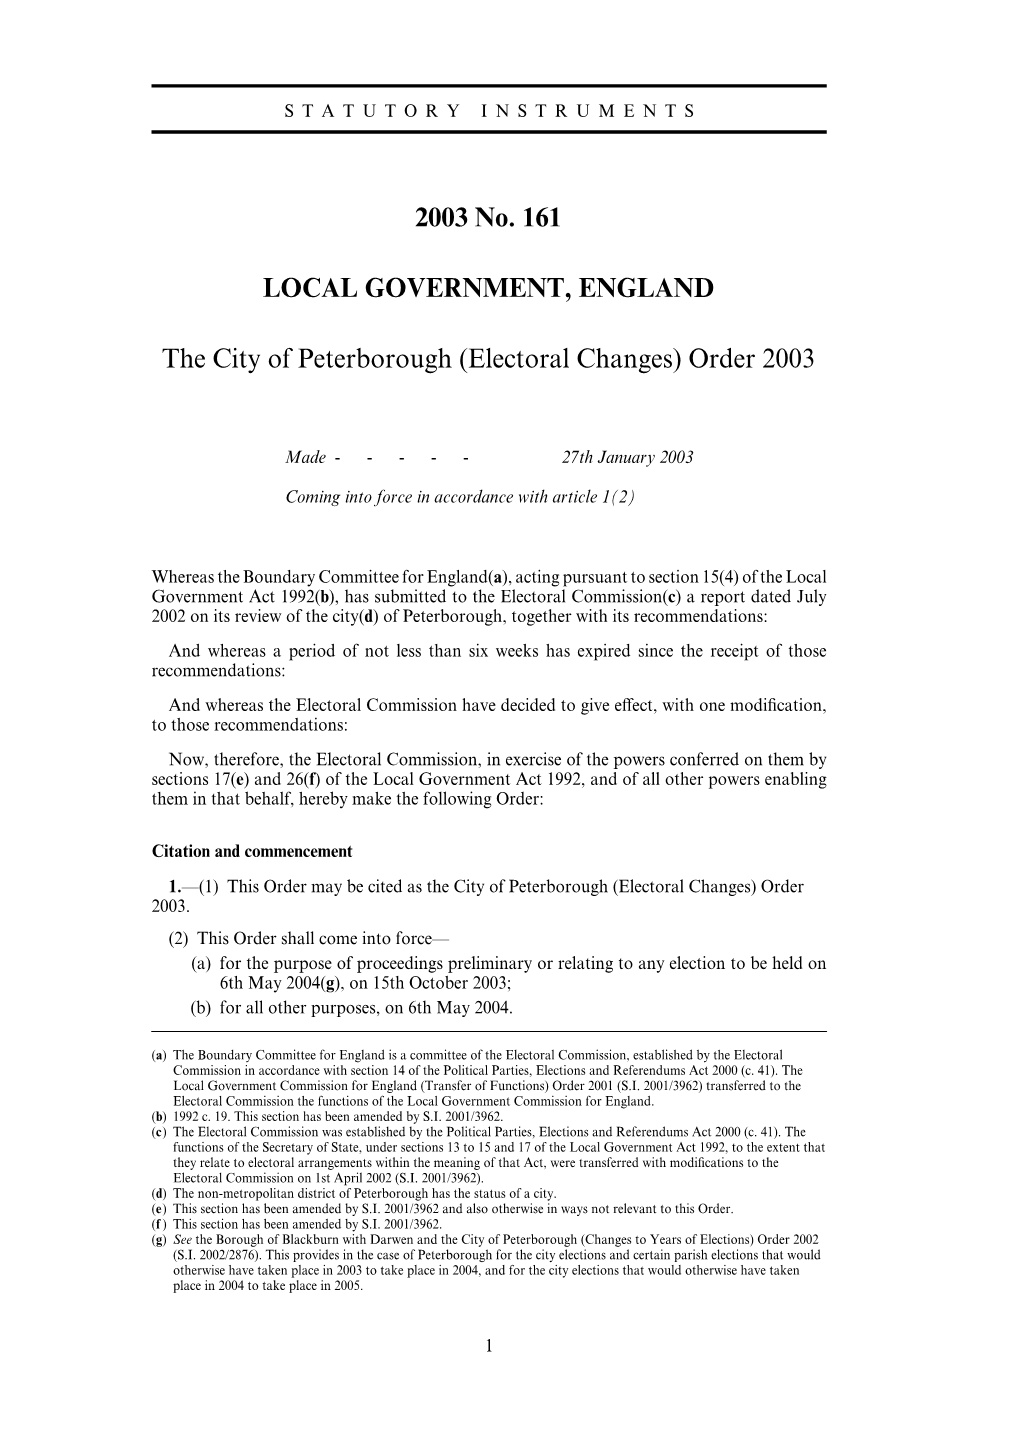 2003 No. 161 LOCAL GOVERNMENT